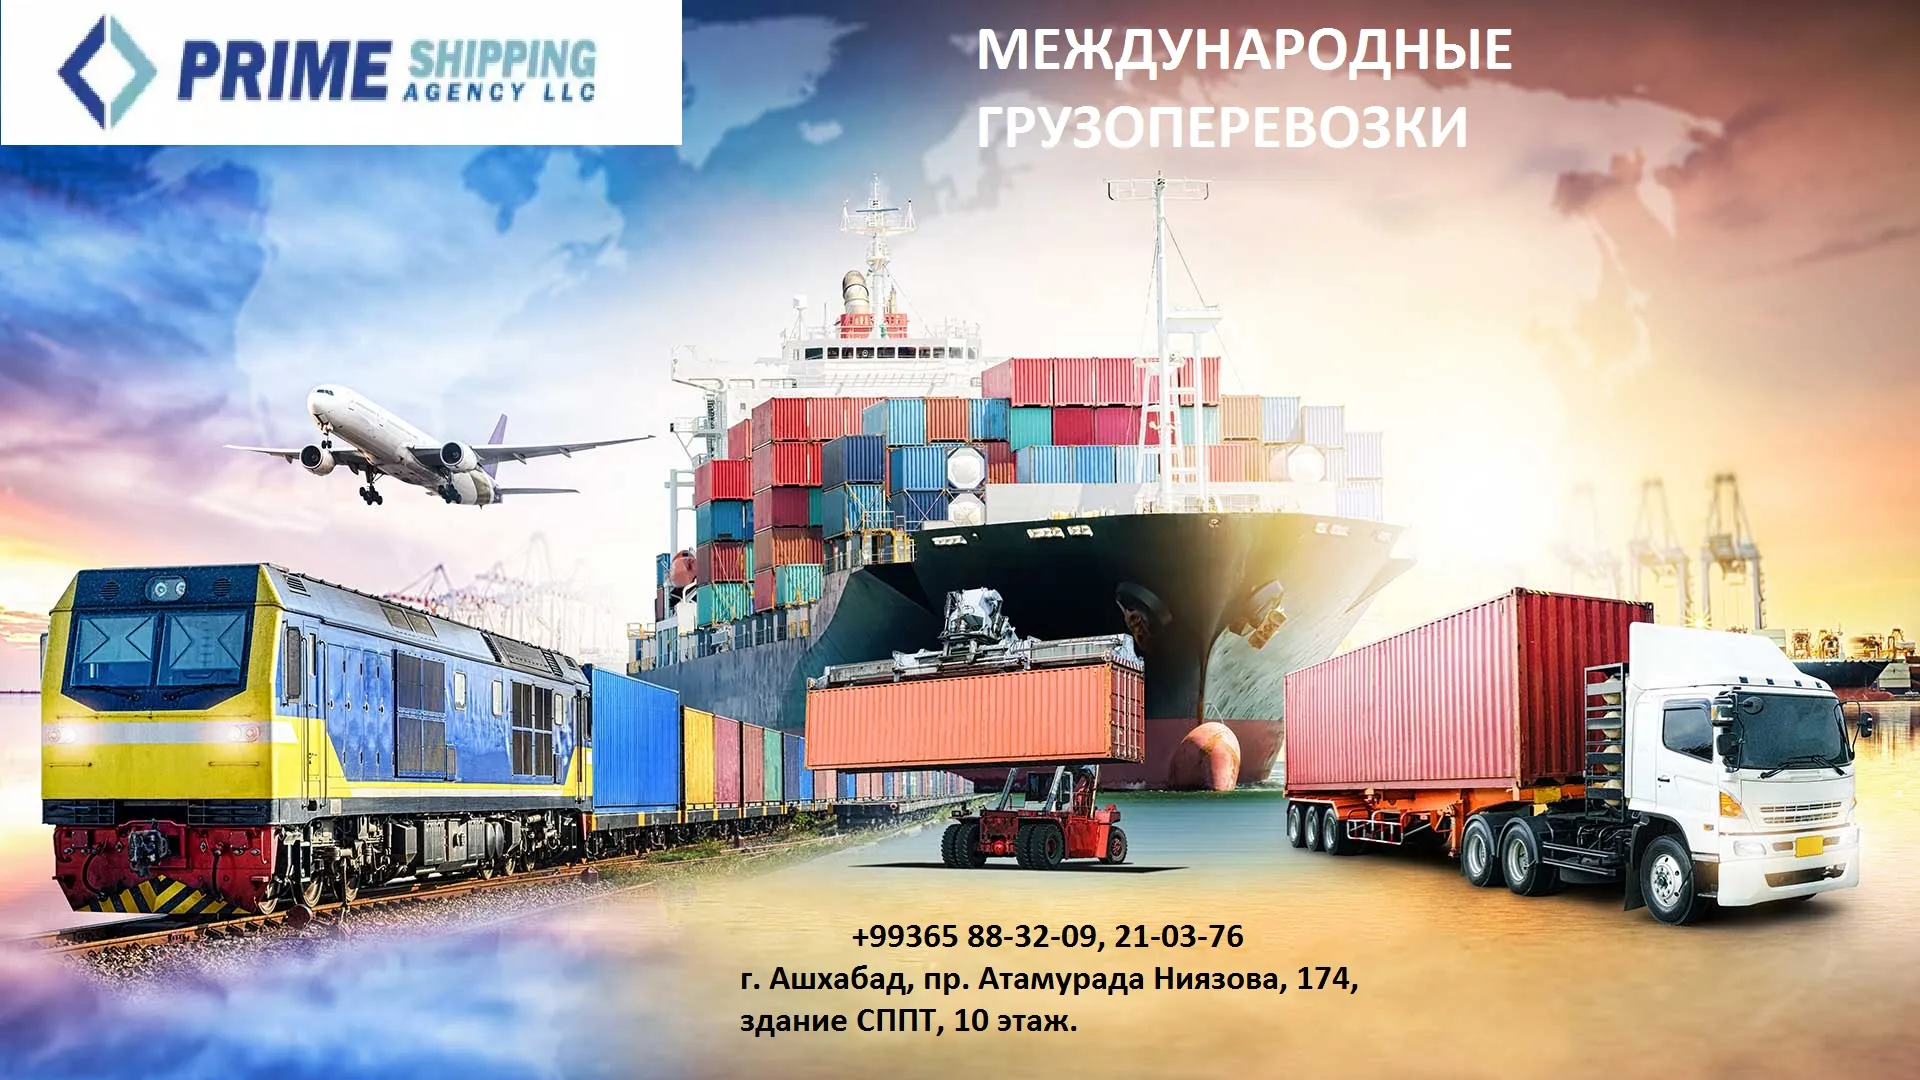 Prime Shipping Agency